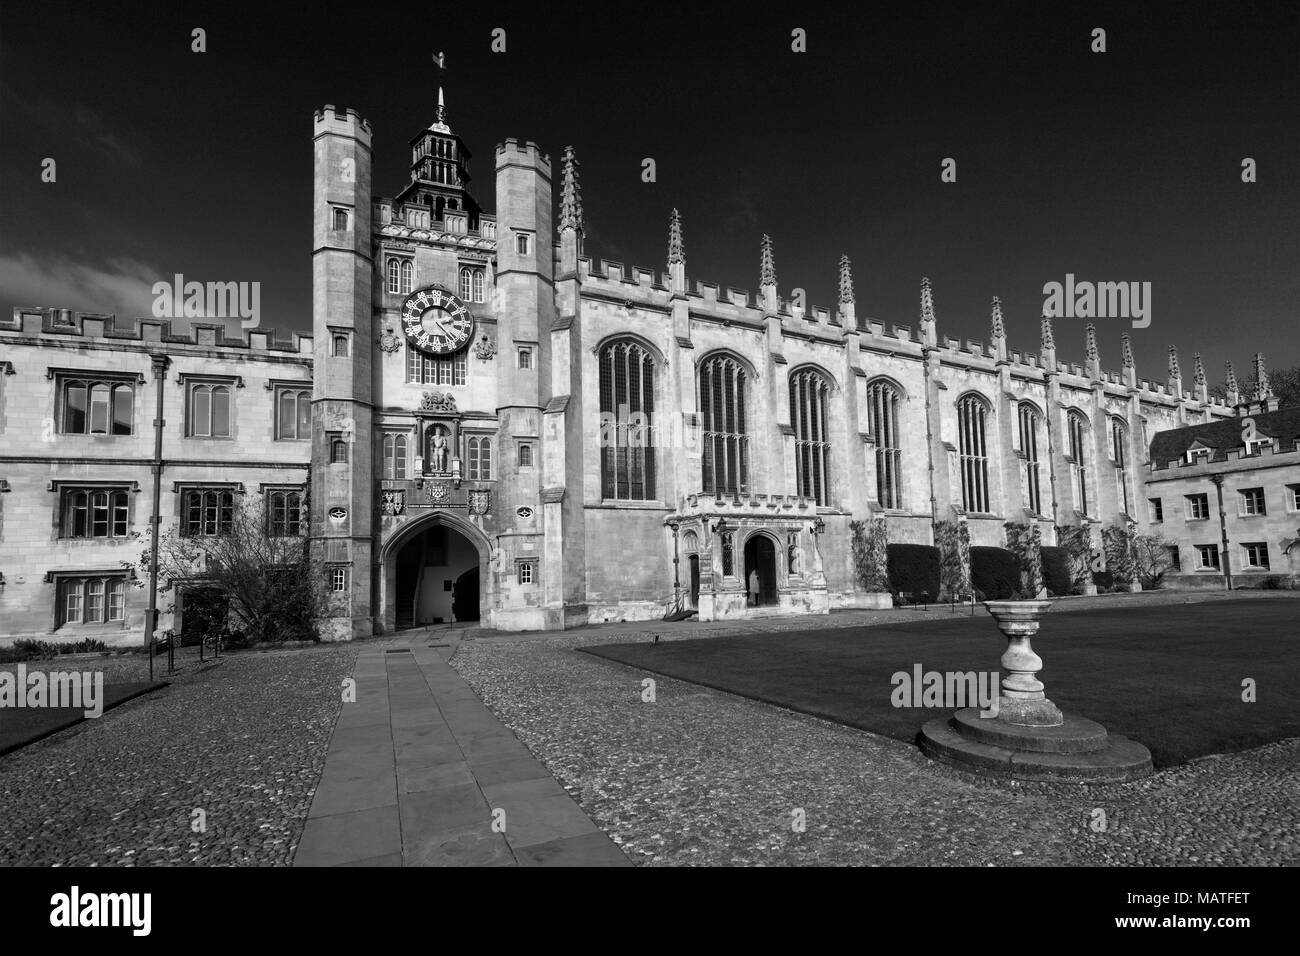 Summer view of Trinity College buildings, Cambridge City, Cambridgeshire, England, UK Stock Photo